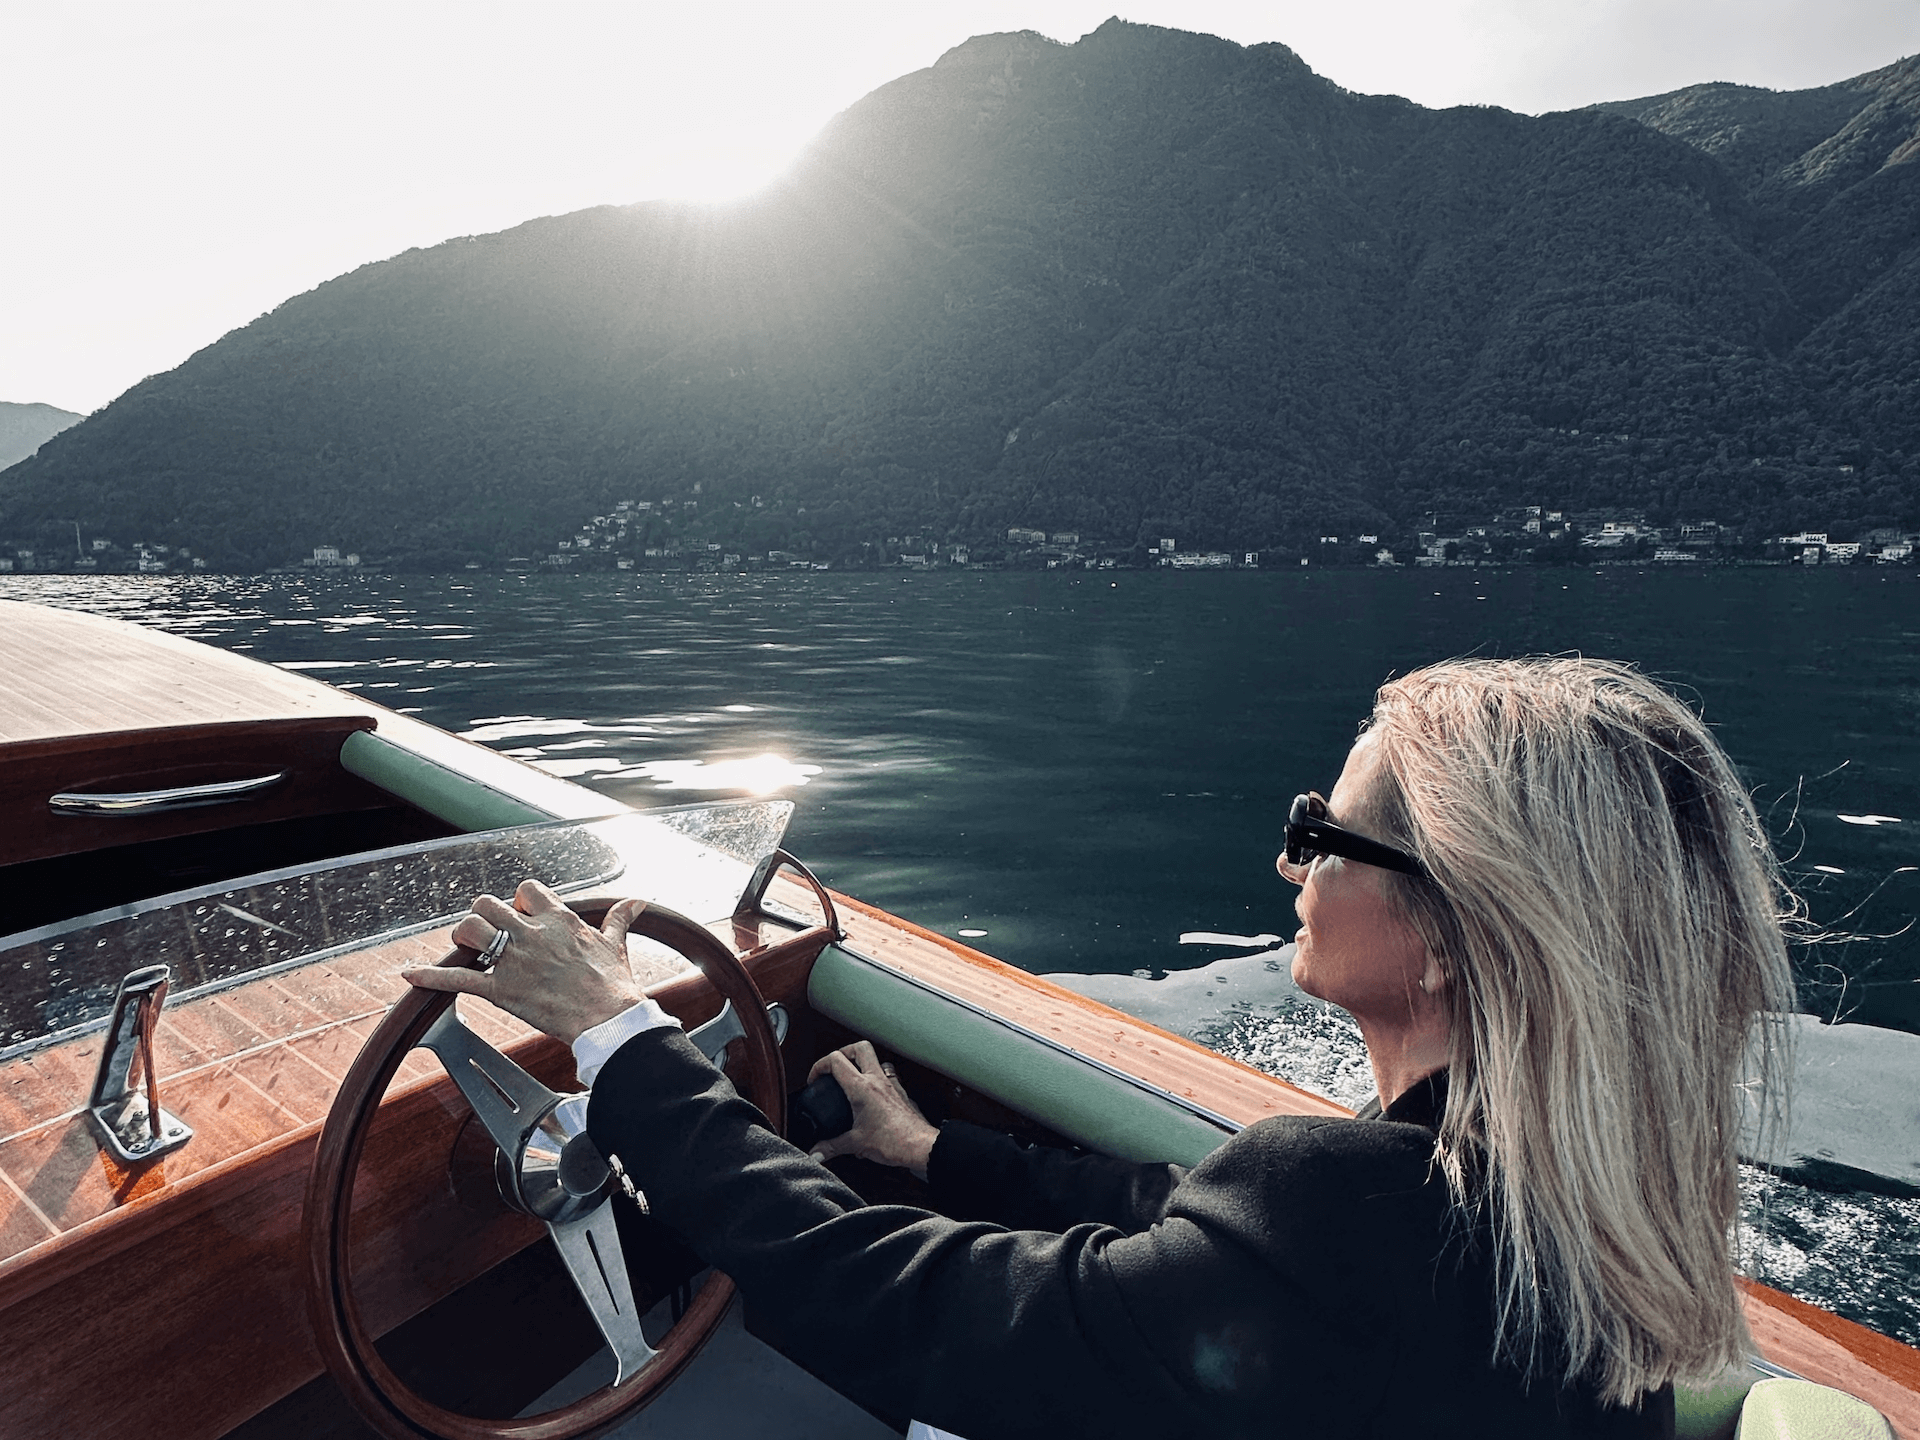 Return to Paradise - Il Sereno, Lake Como in Autumn